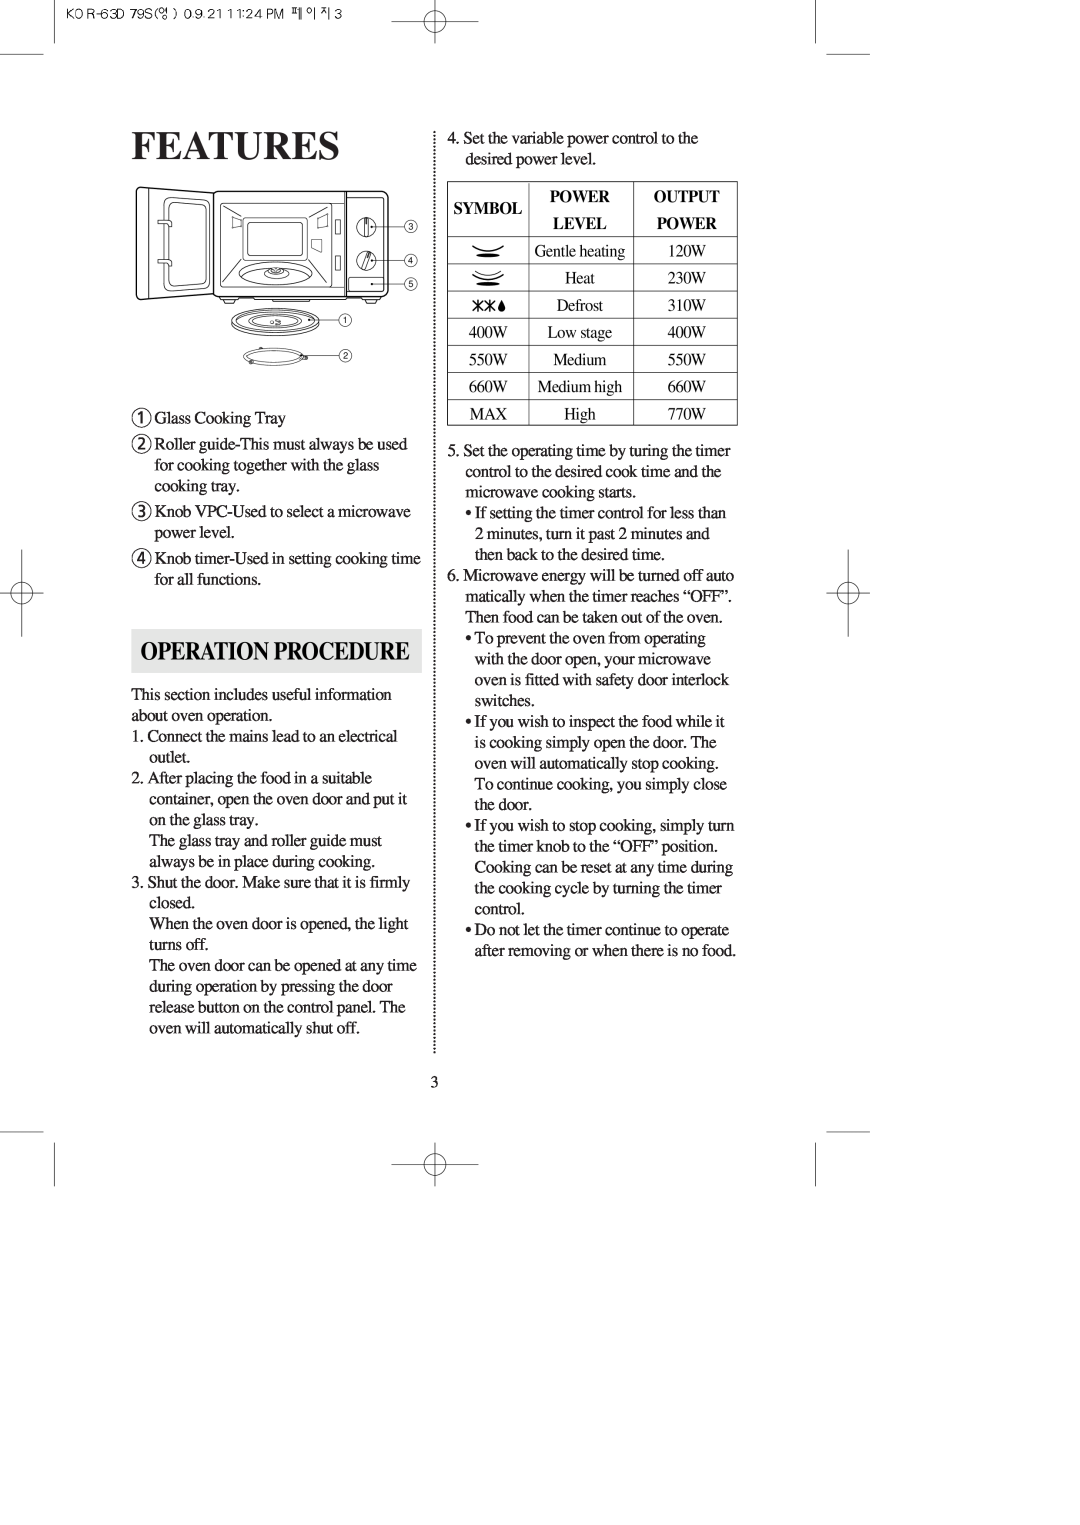 Daewoo KOR-63D79S manual Features, Operation Procedure 